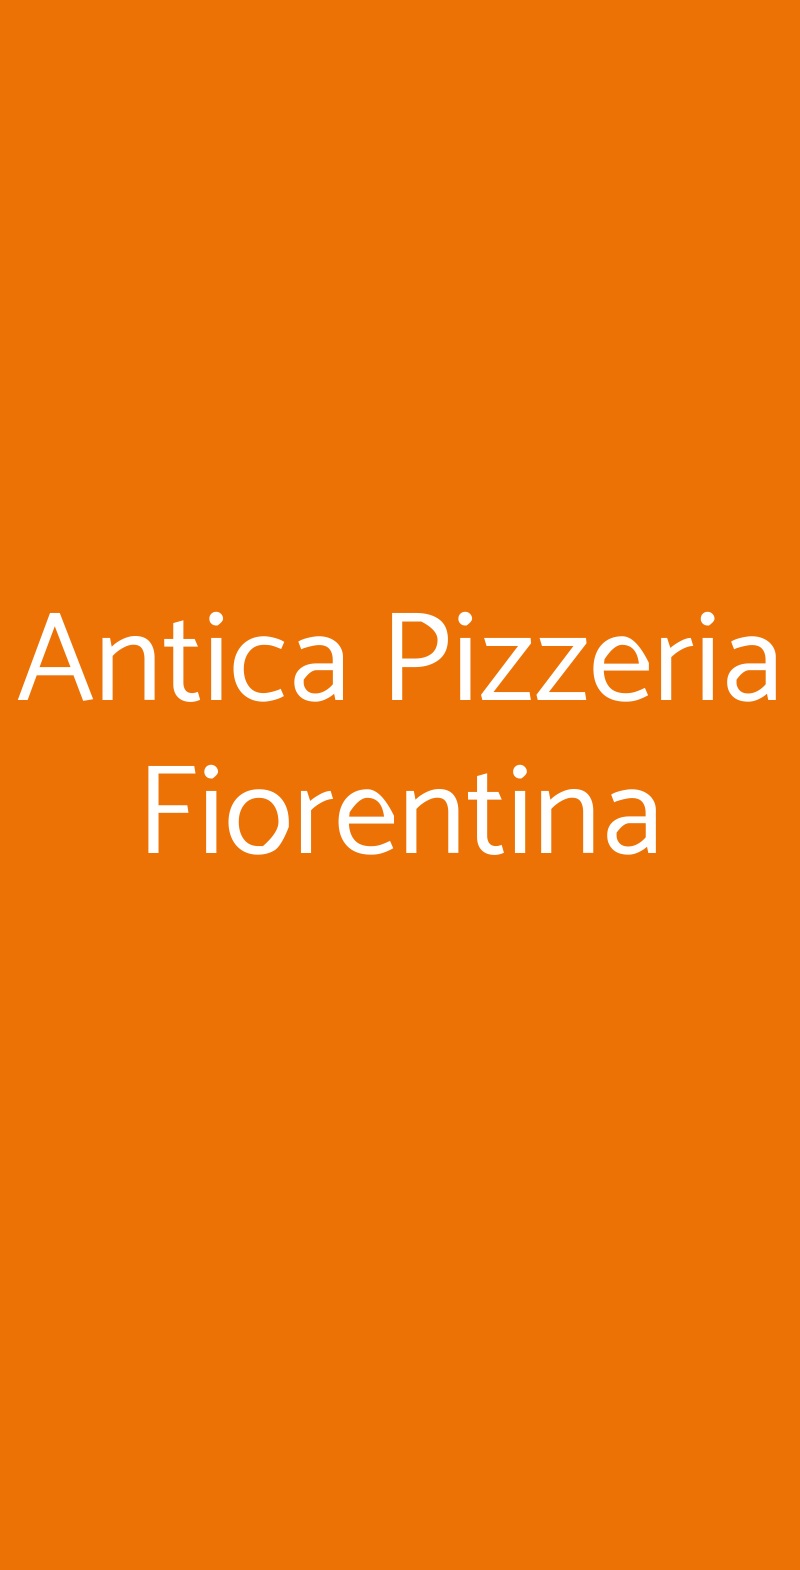 Antica Pizzeria Fiorentina Milano menù 1 pagina